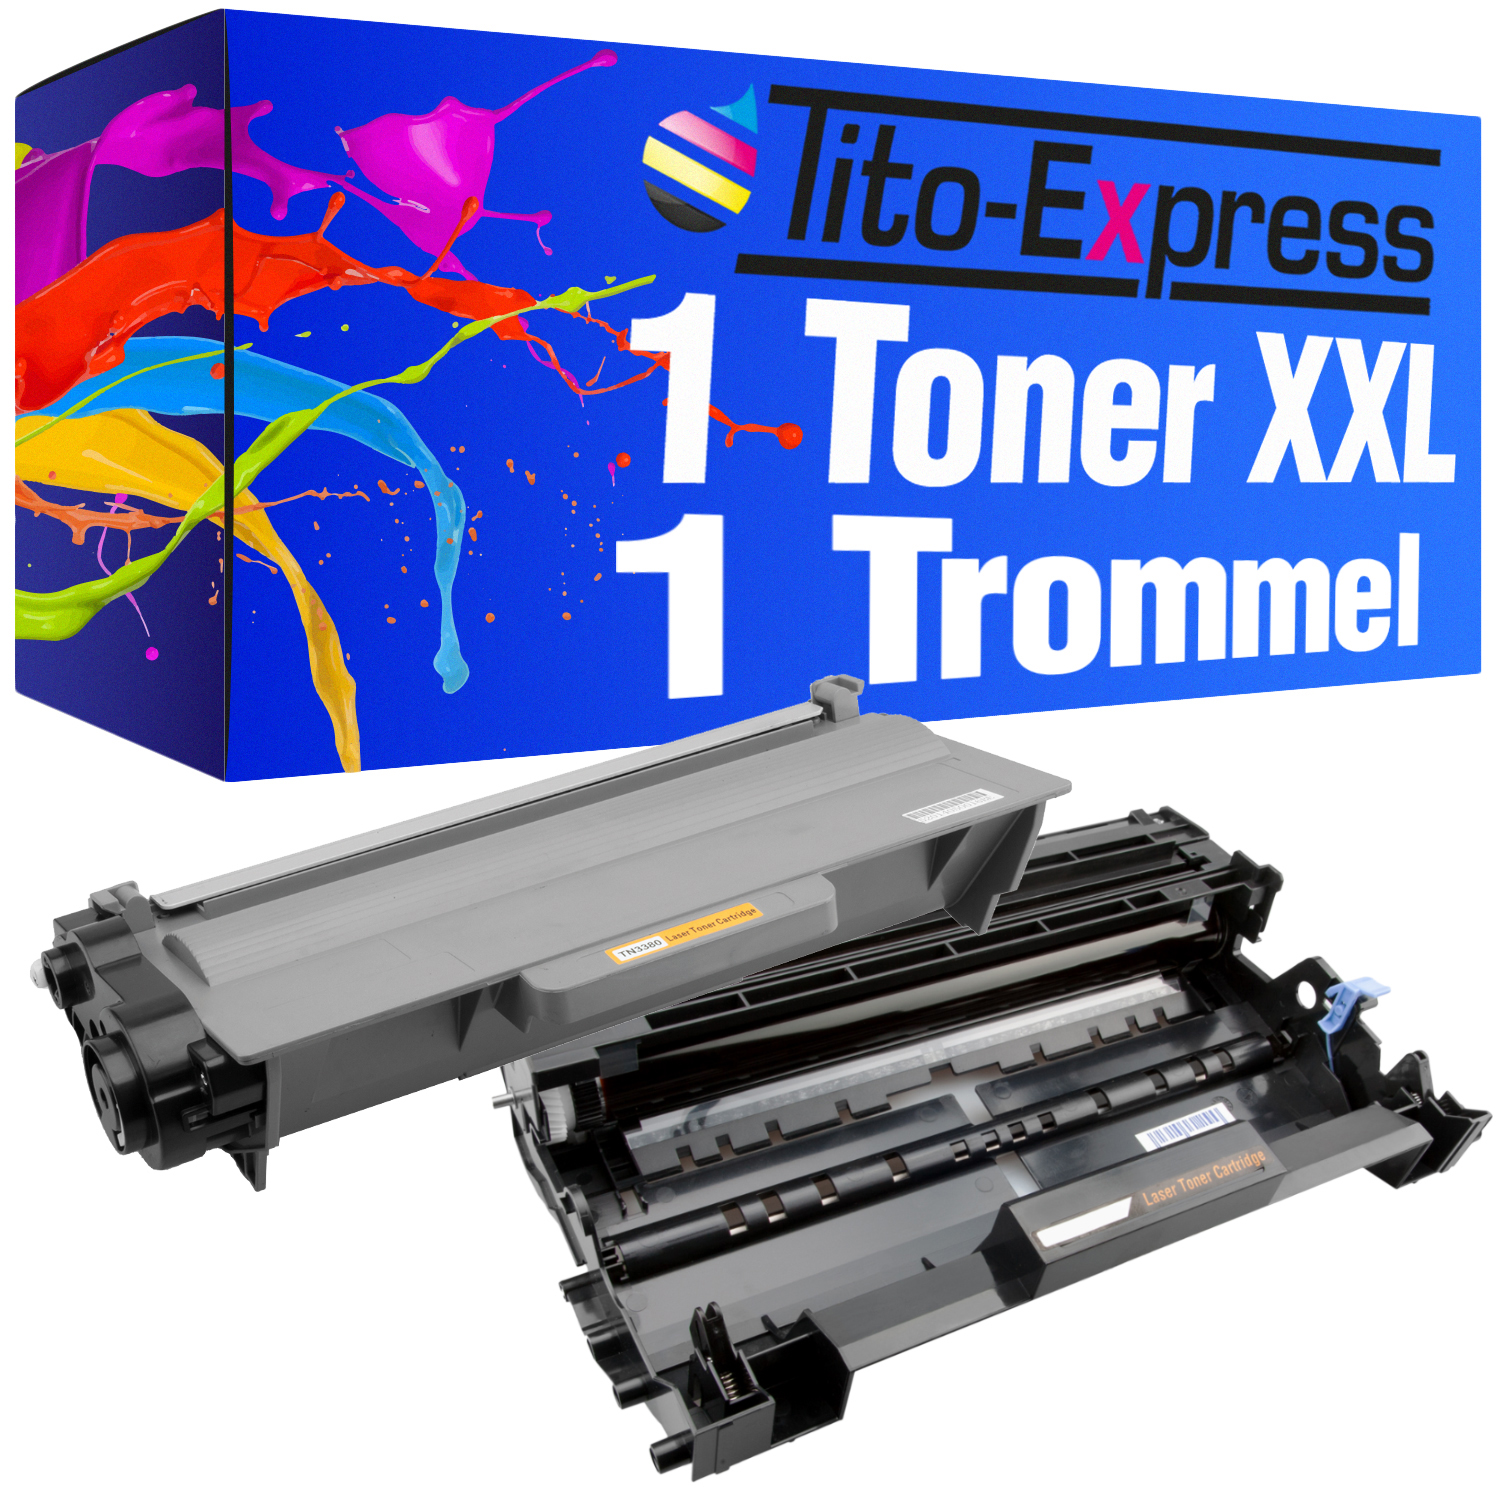 Toner Trommel PLATINUMSERIE & TN3380 ersetzt 1 DR3300) black 1 (TN3380 Toner DR3300 Trommel TITO-EXPRESS Brother